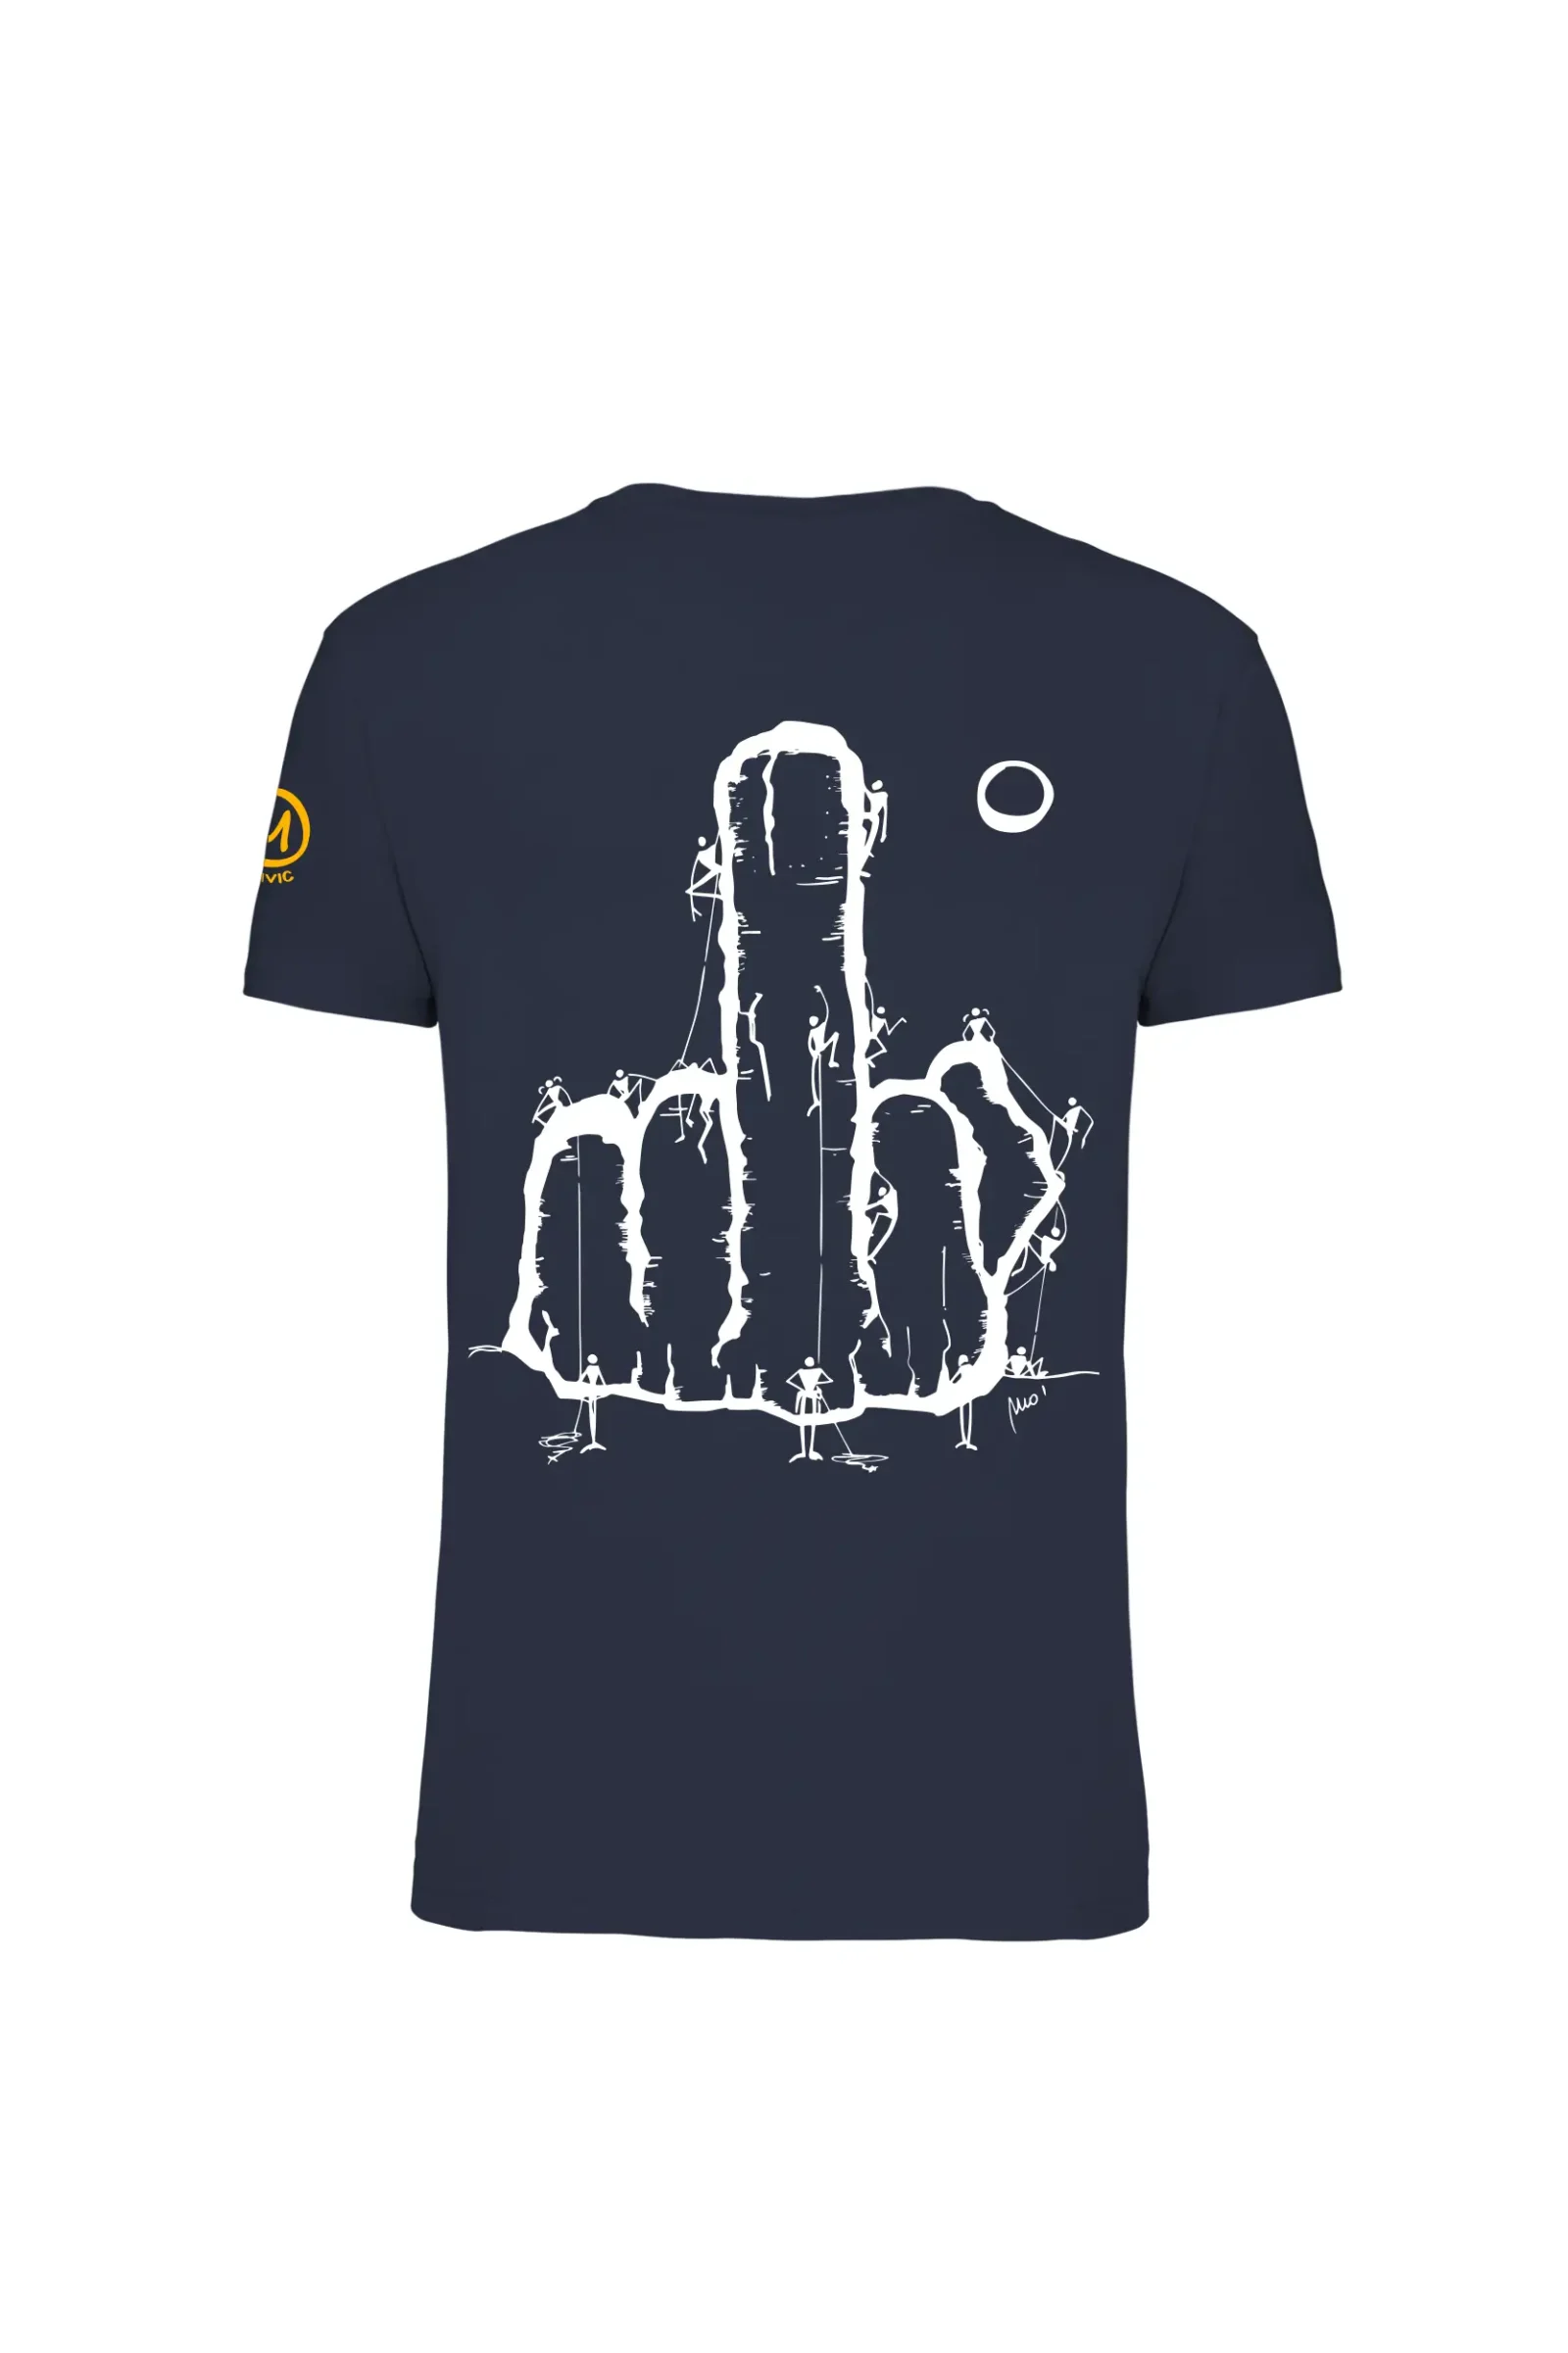 Men's climbing t-shirt - navy blue cotton - "Fuck the System" graphics - HASH MONVIC